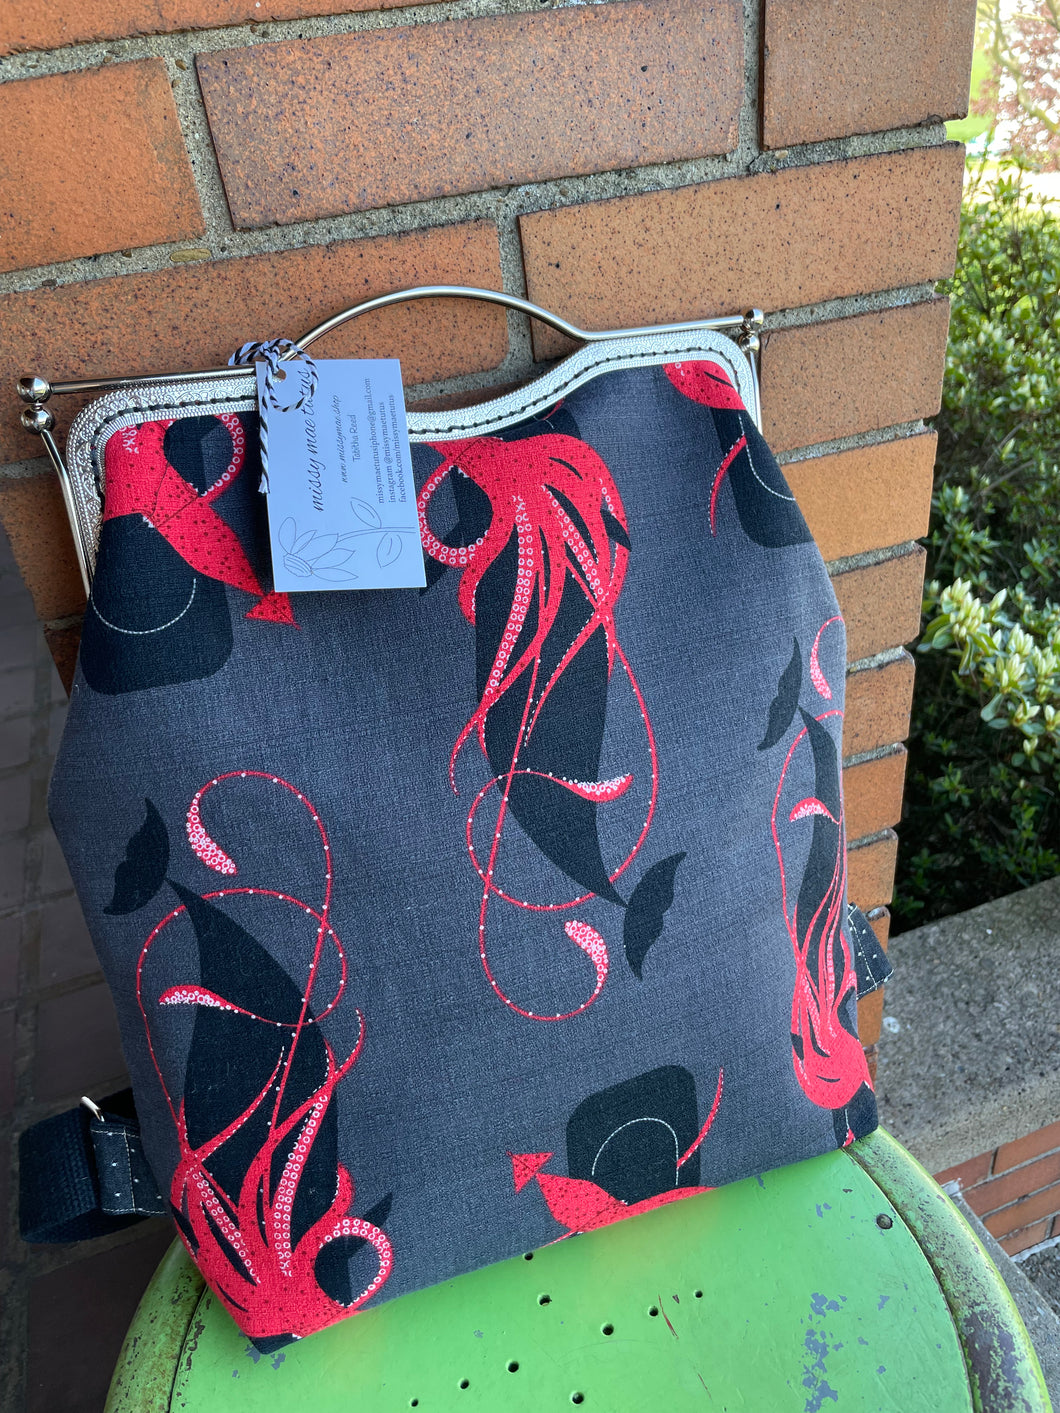 Squid + Whale Charley Harper Fabric Large Clutch Backpack